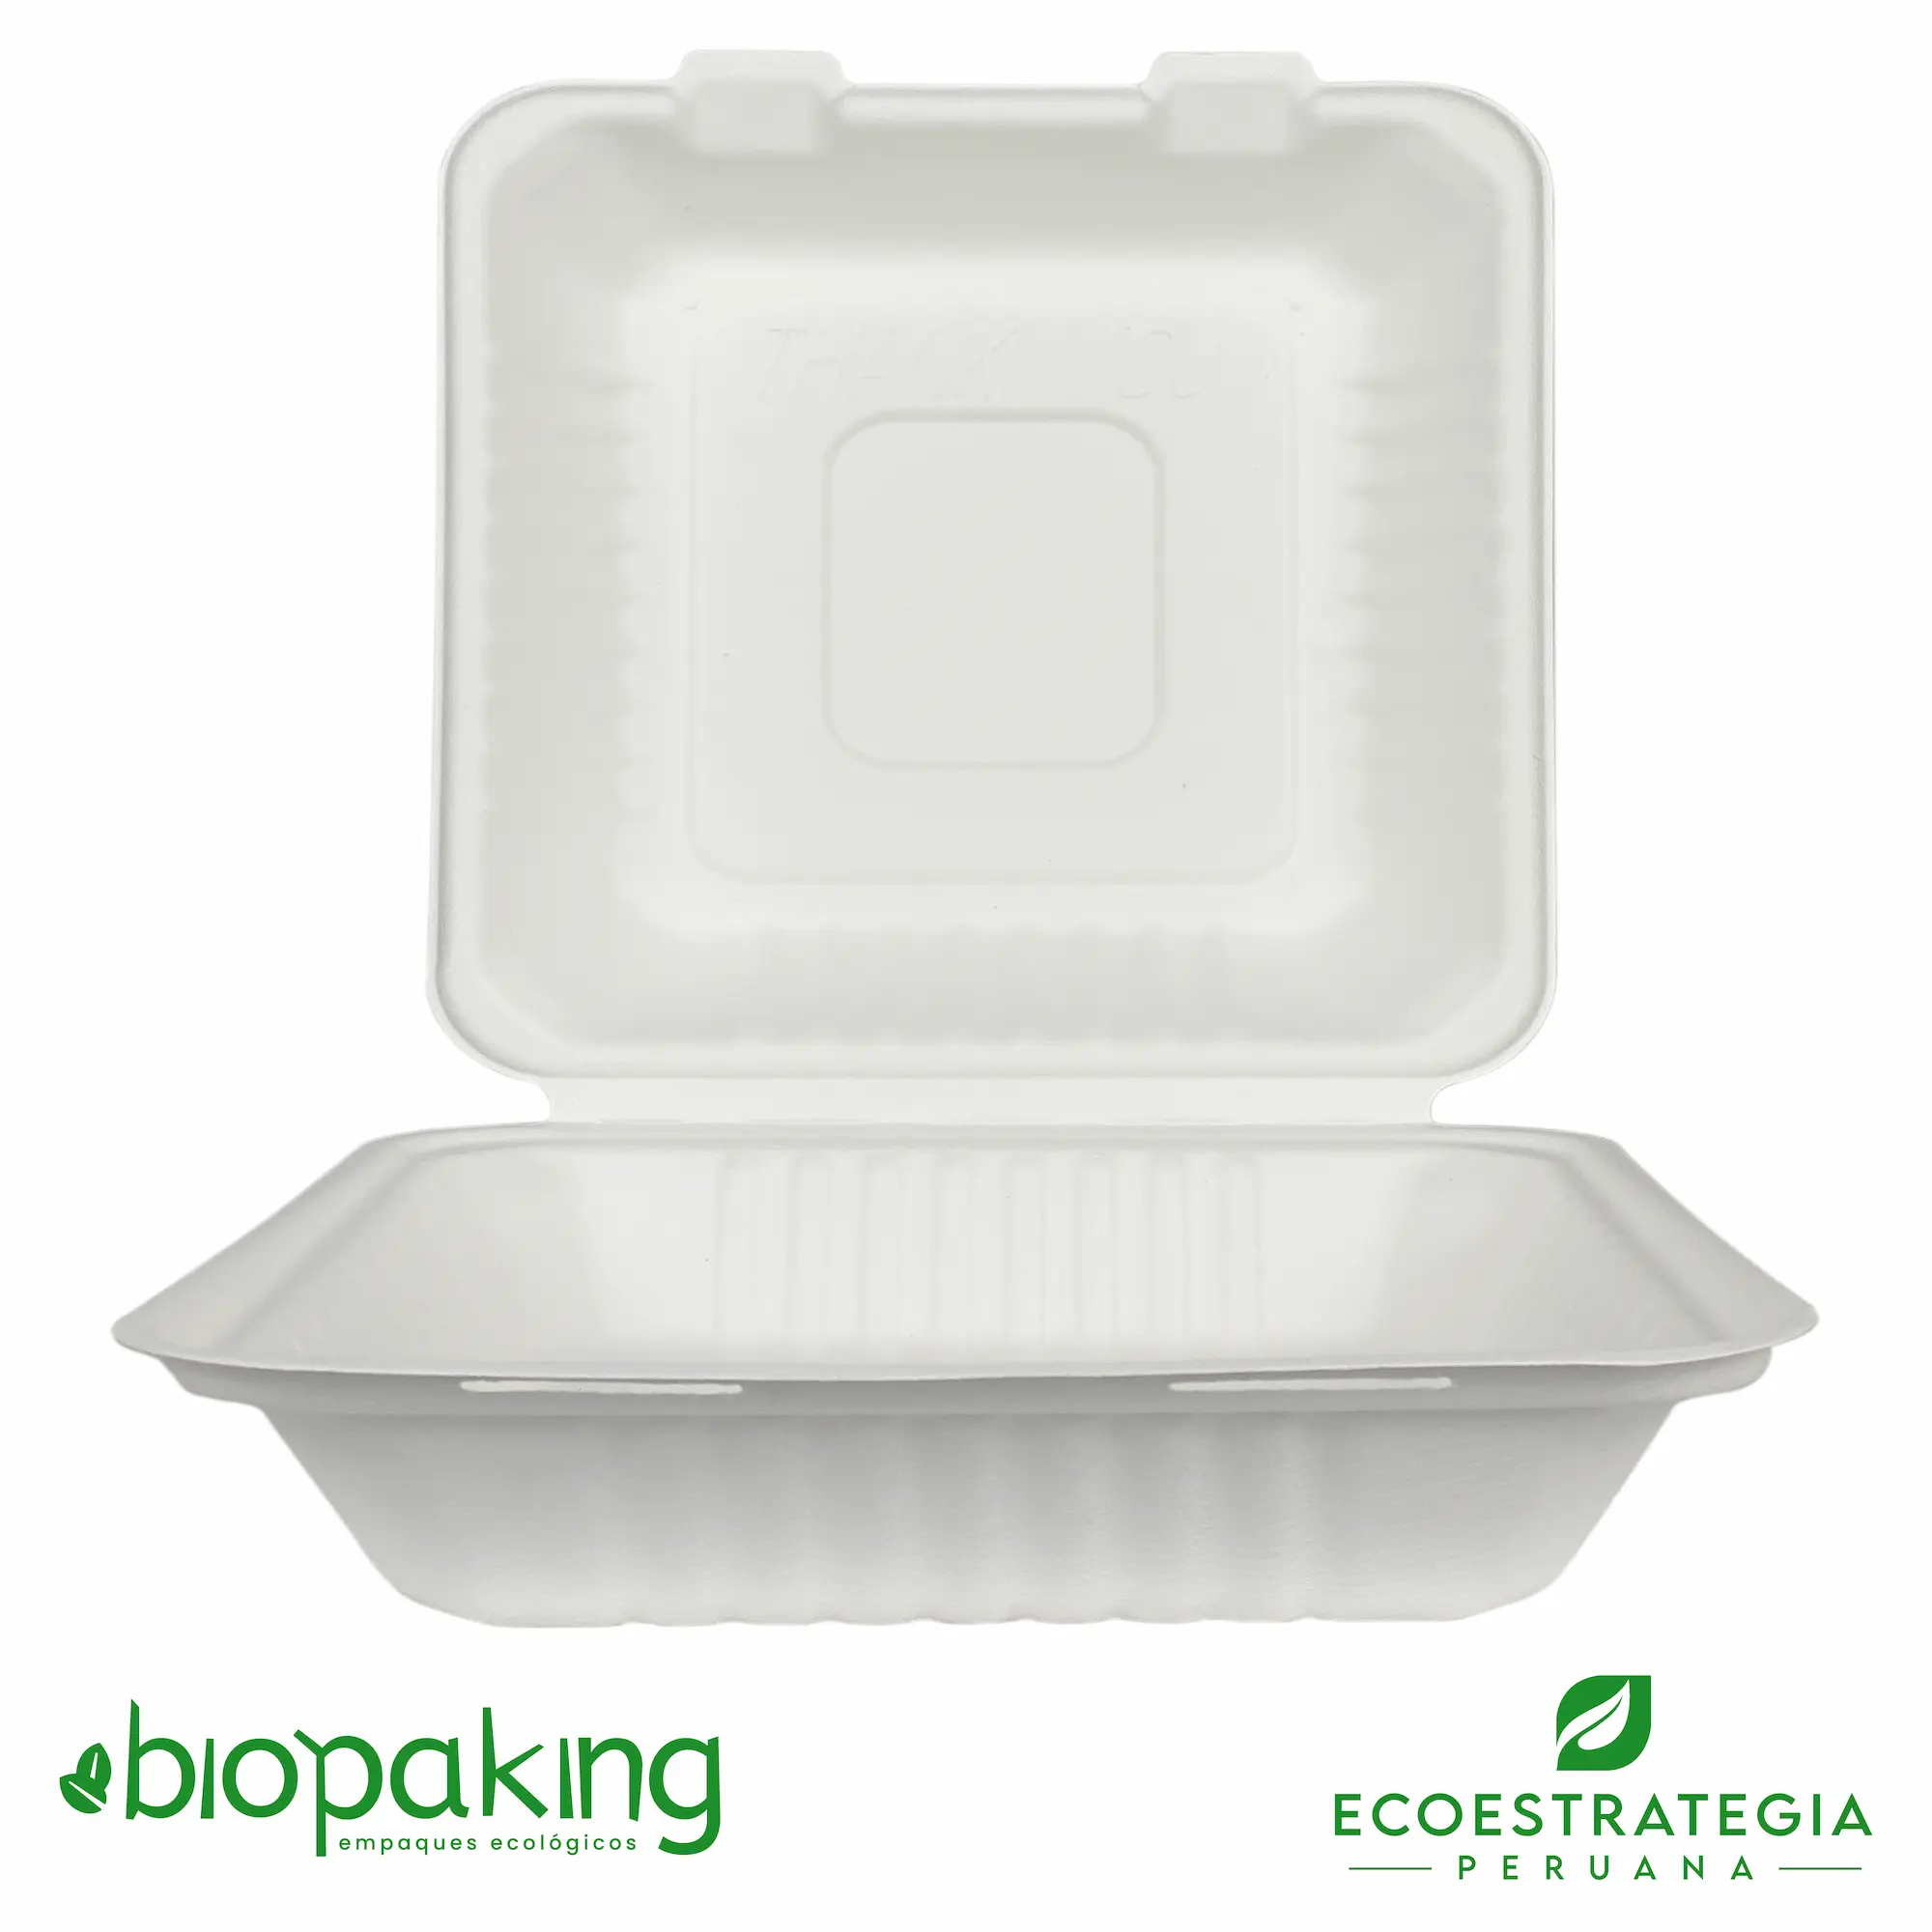 https://www.ecoestrategiaperuana.com/assets/img/productos/envases-biodegradables/ct1/envase-biodegradable-ct1-EP10-0.webp